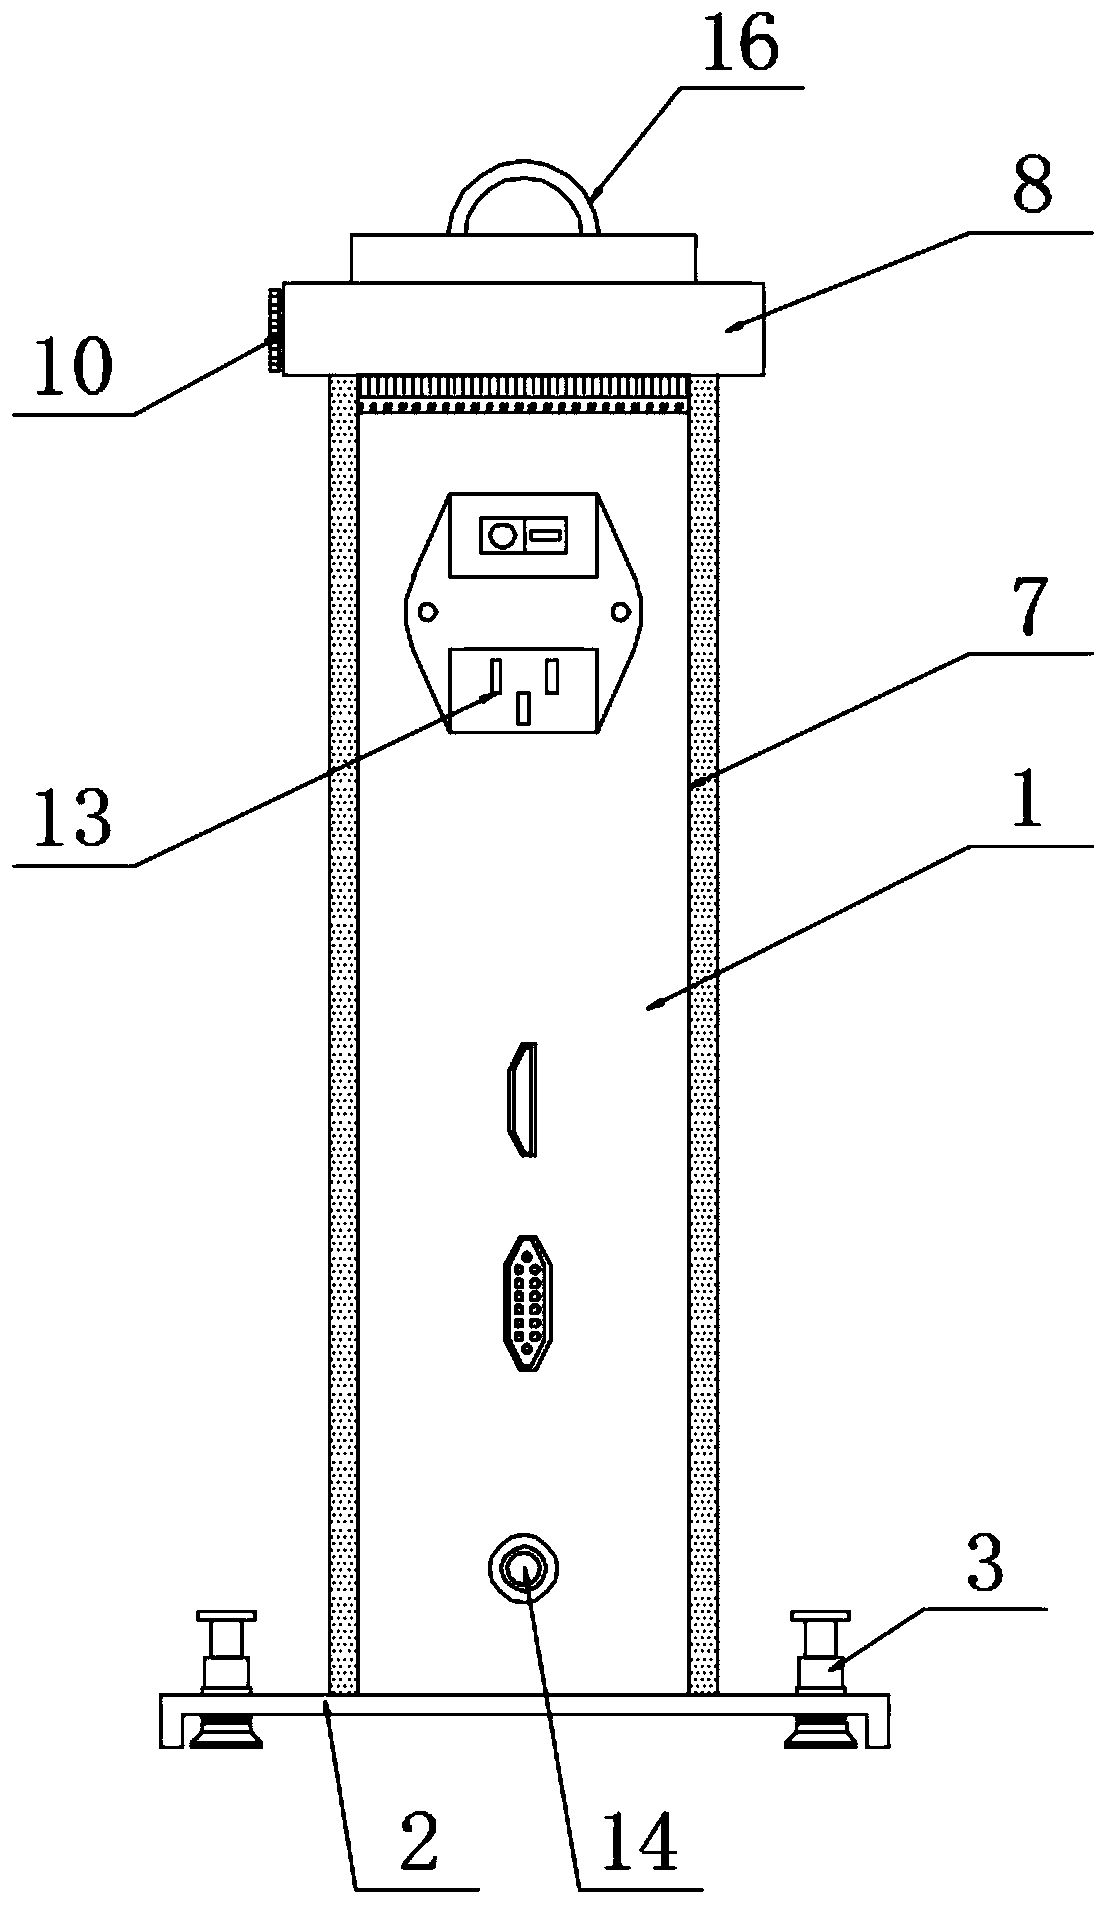 Air gauge of electronic beam